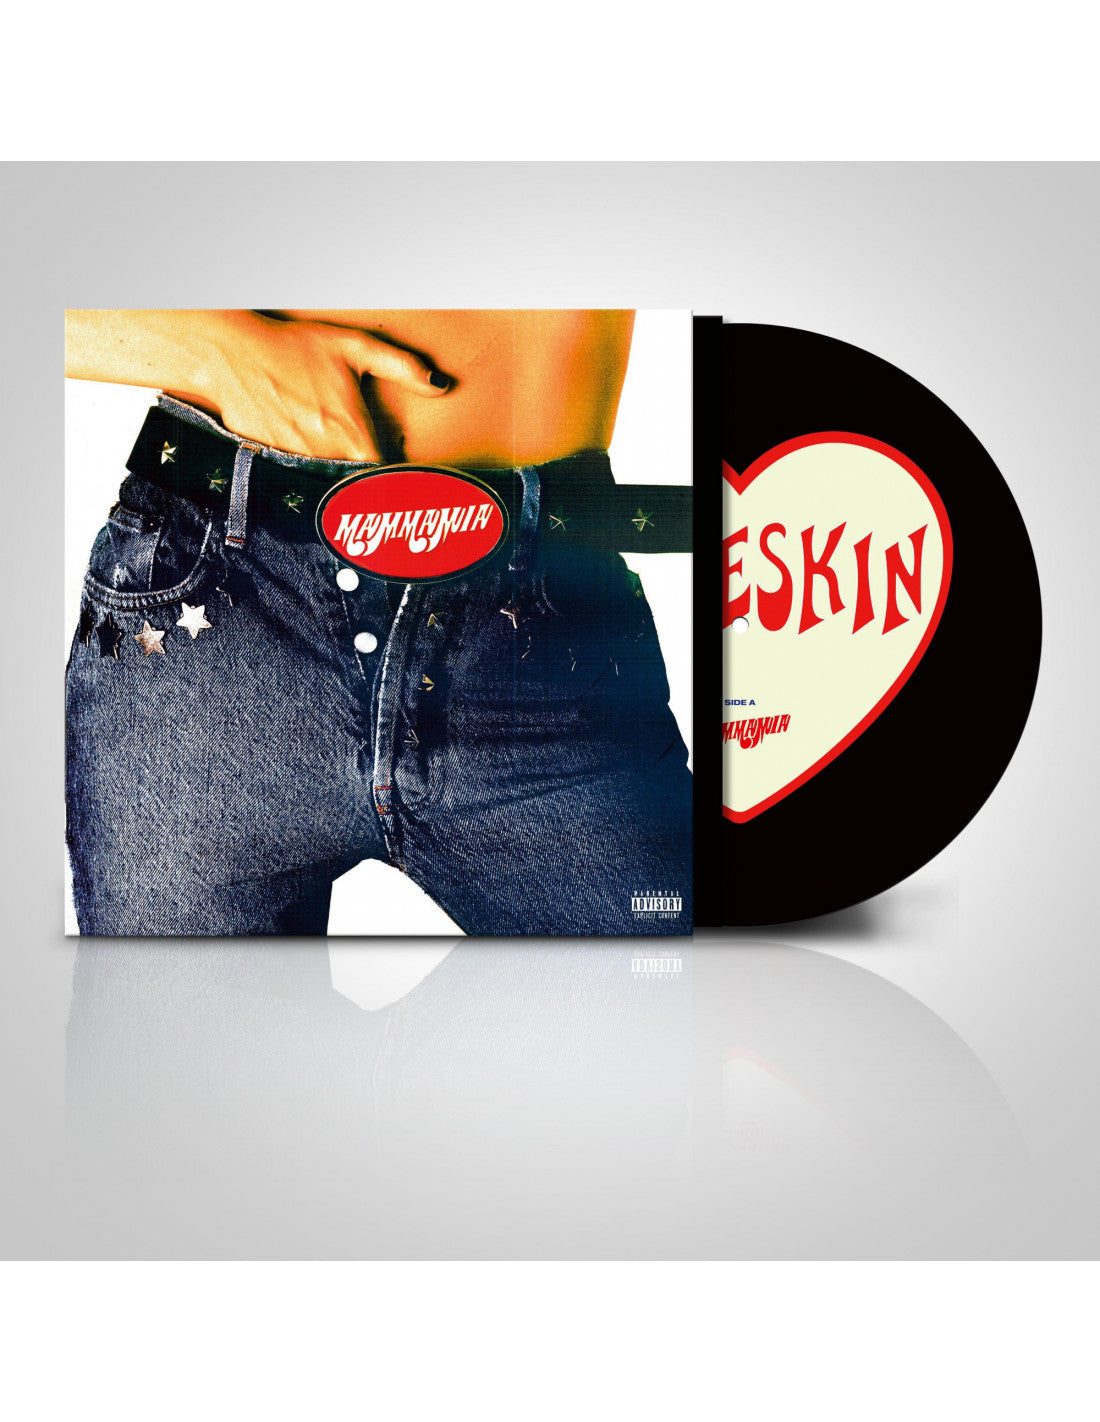 Maneskin - Mammamia |  Vinyl LP | Maneskin - Mammamia (Picture Disc)  (12'' Vinyl) | Records on Vinyl